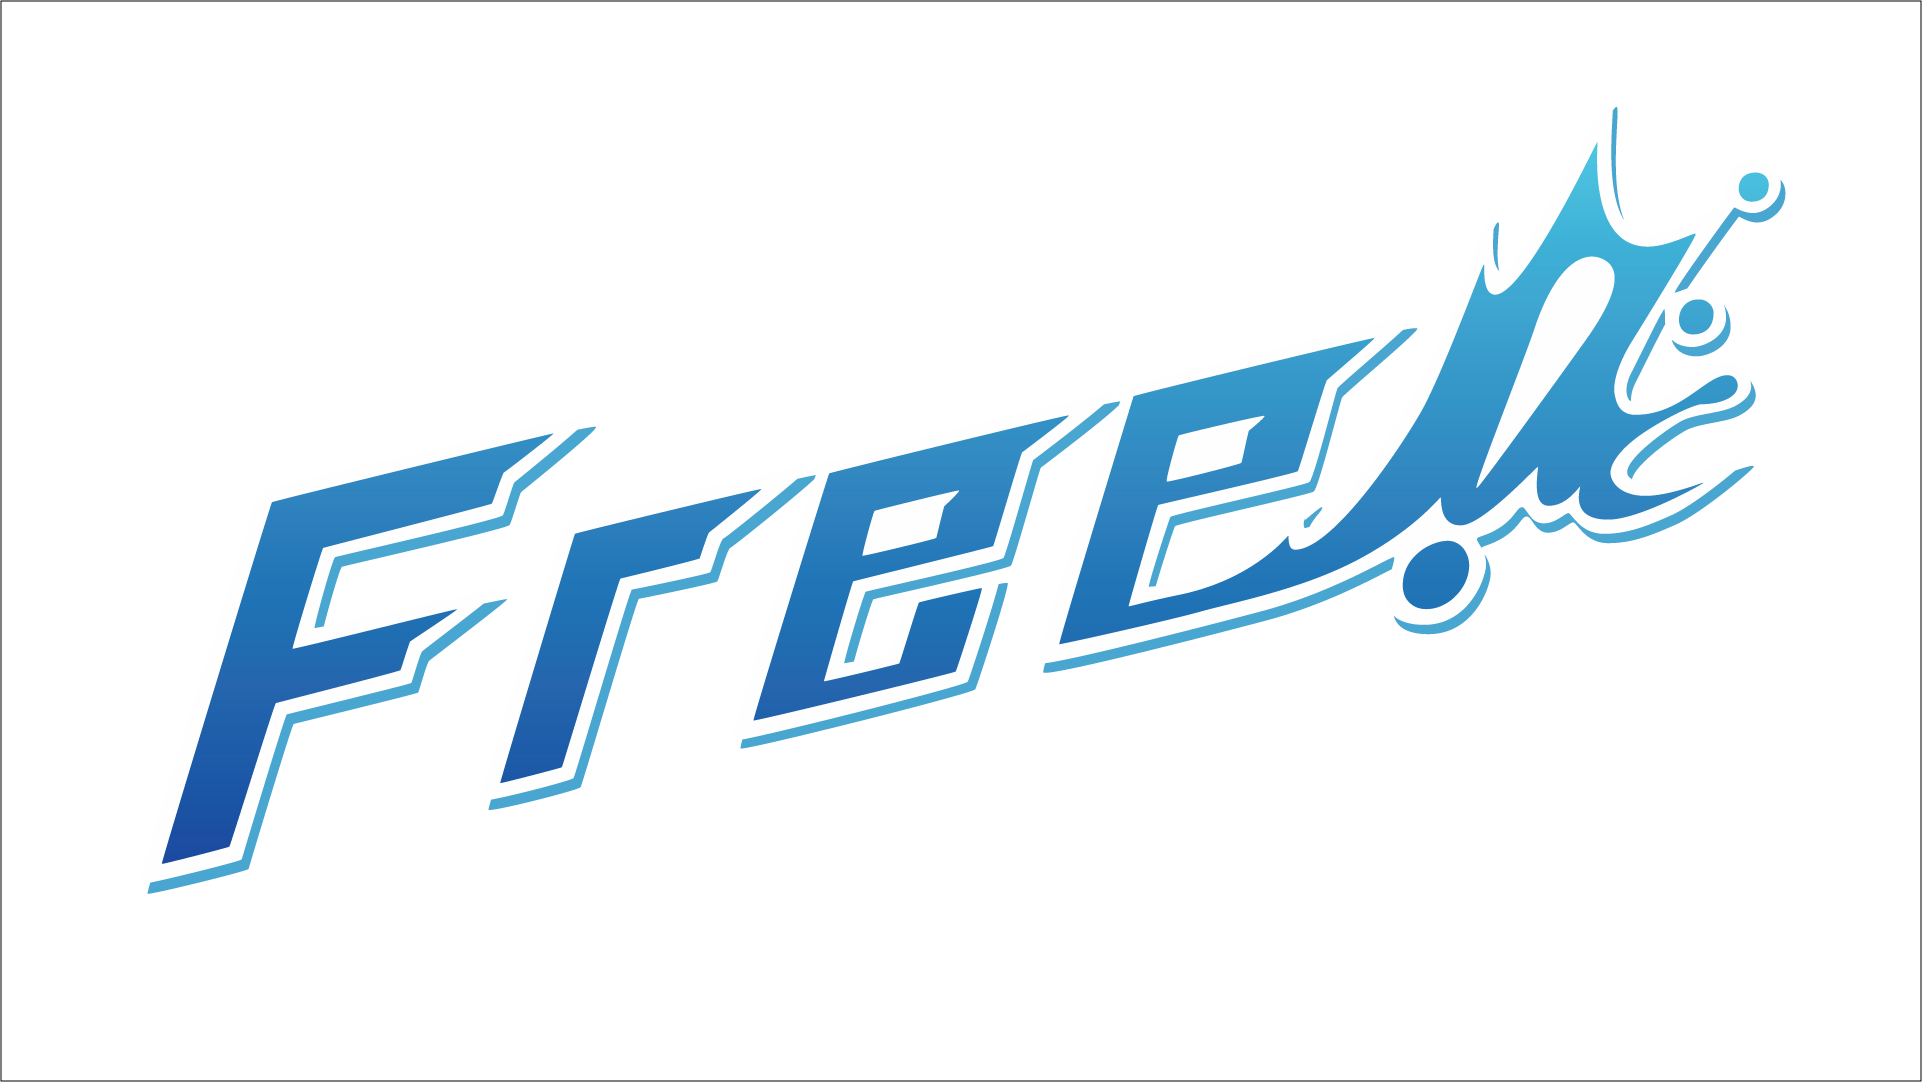 Free! Iwatobi Swim Club Logo